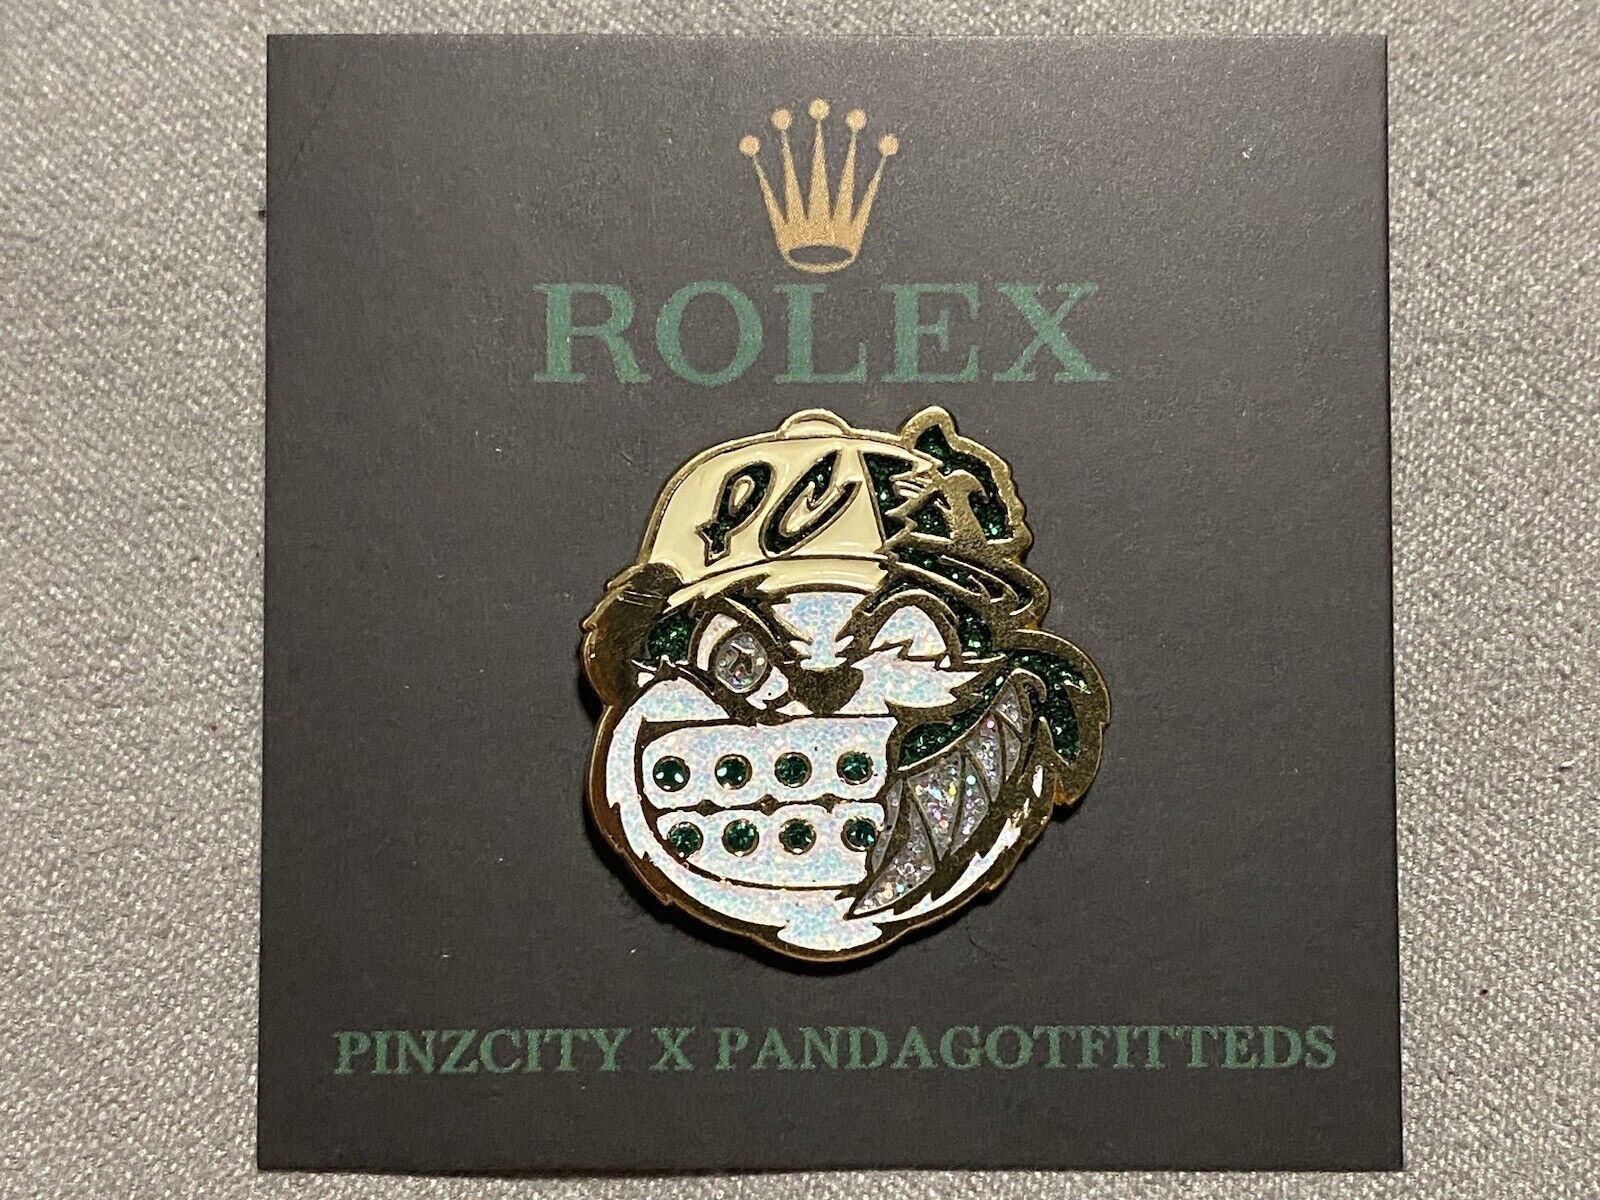 Pinzcity x Panda Got Fitteds Rolex Gold Green White panda scare bear hat pin